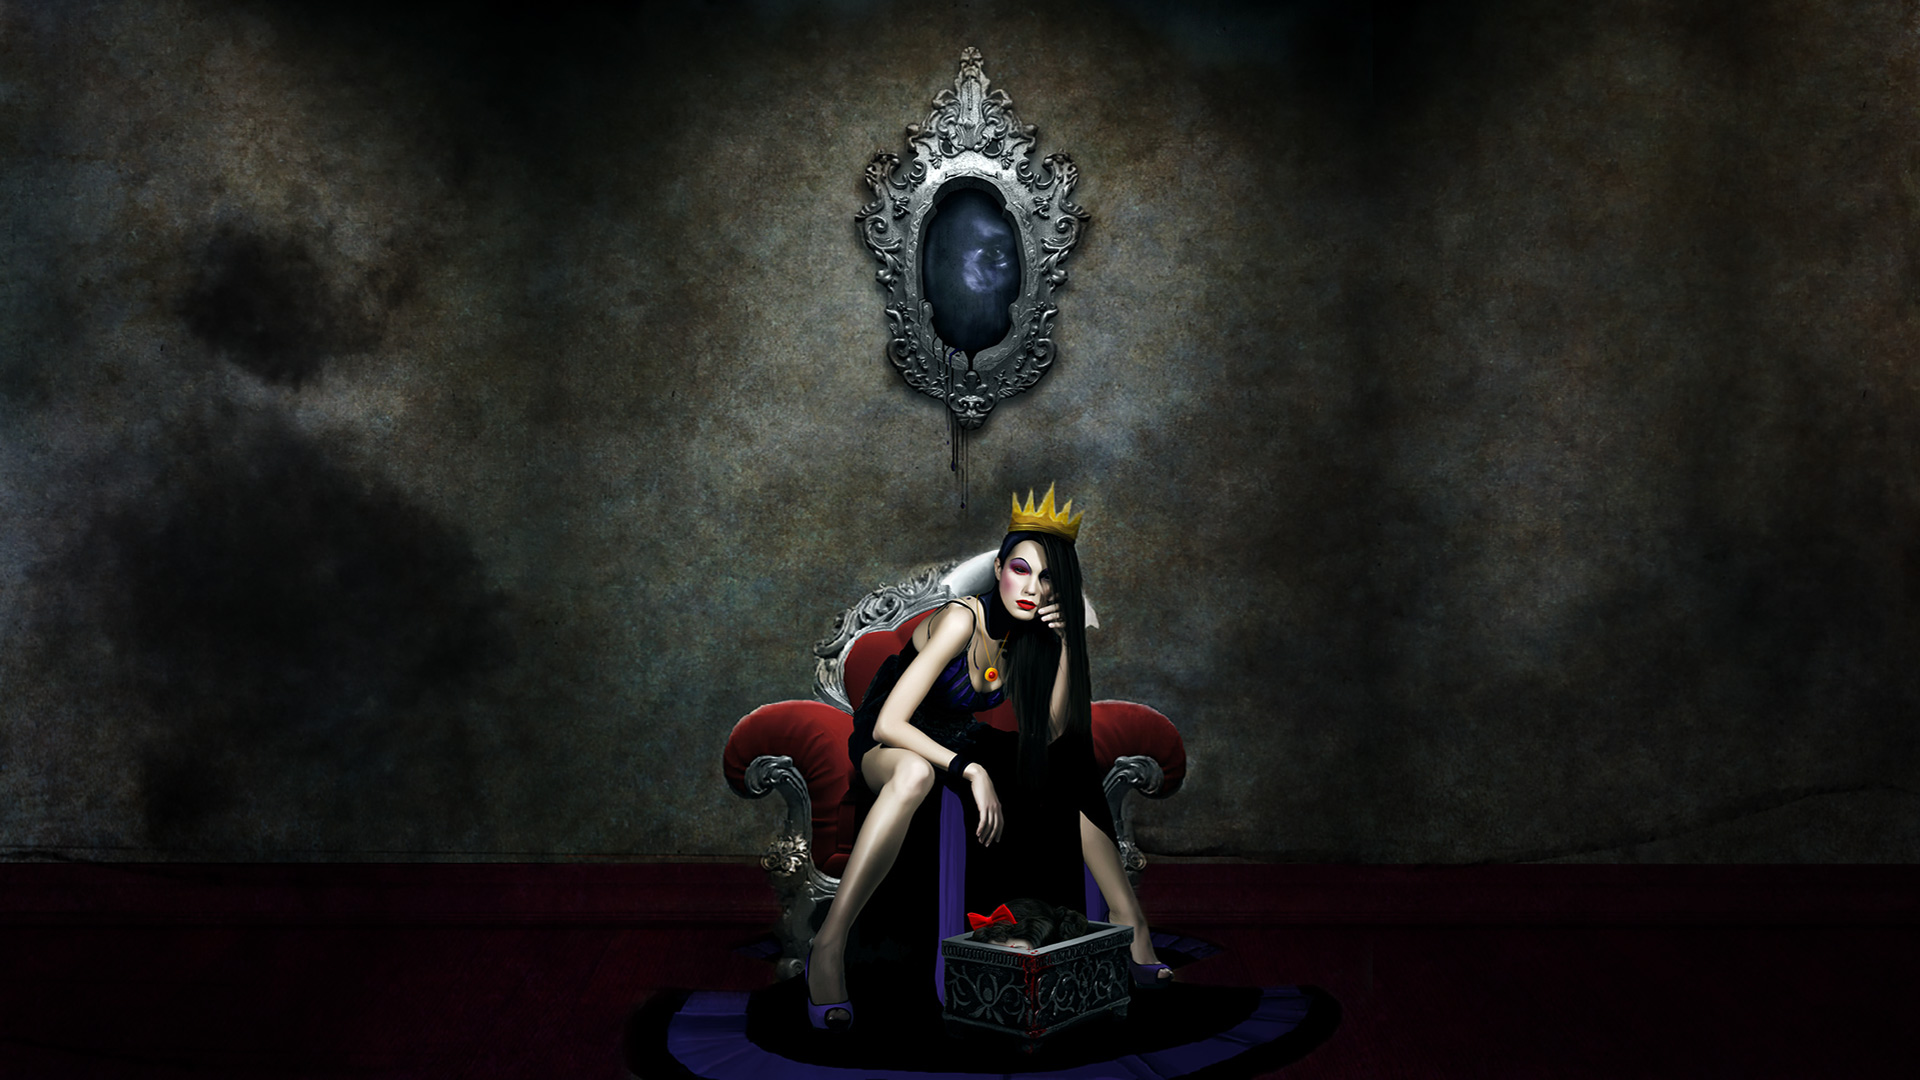 General 1920x1080 Snow White dark fantasy dark hair crown legs necklace fantasy girl fantasy art queen (royalty)